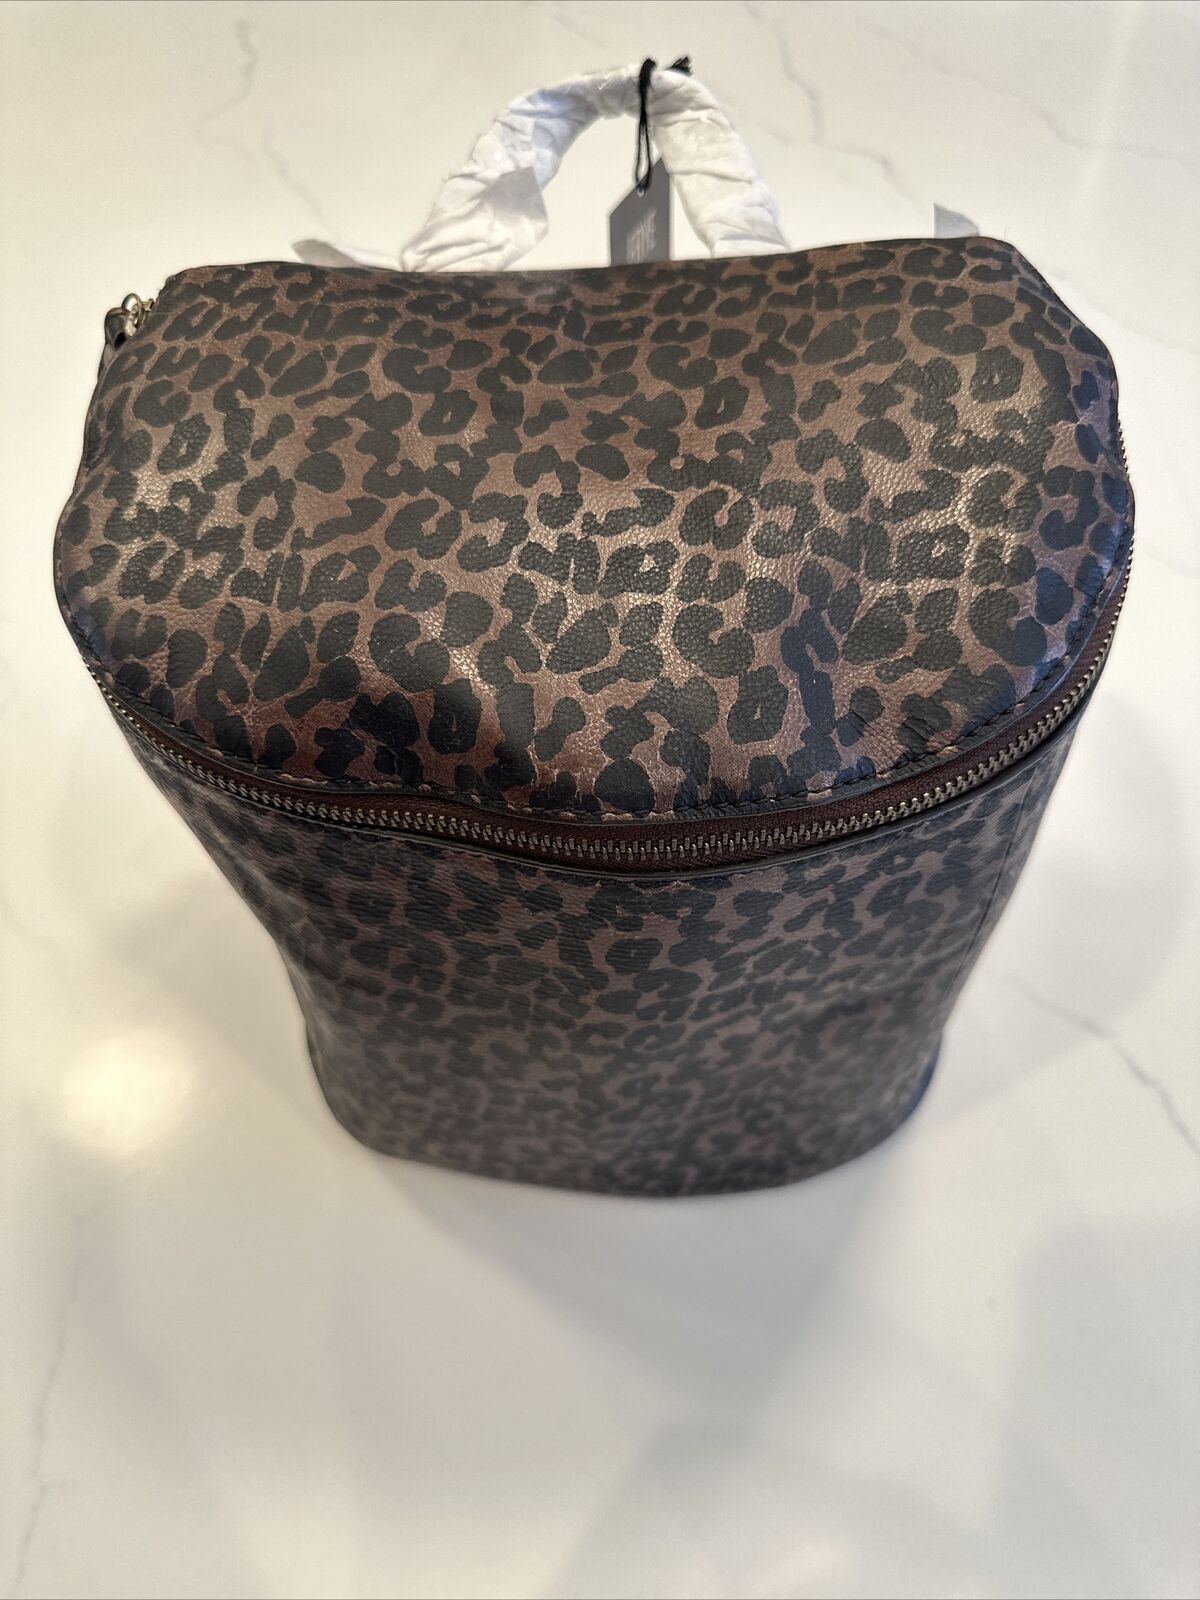 FRYE Maddie Leopard Print Leather Backpack  MSRP $278 w Detachable Frye Key Fob